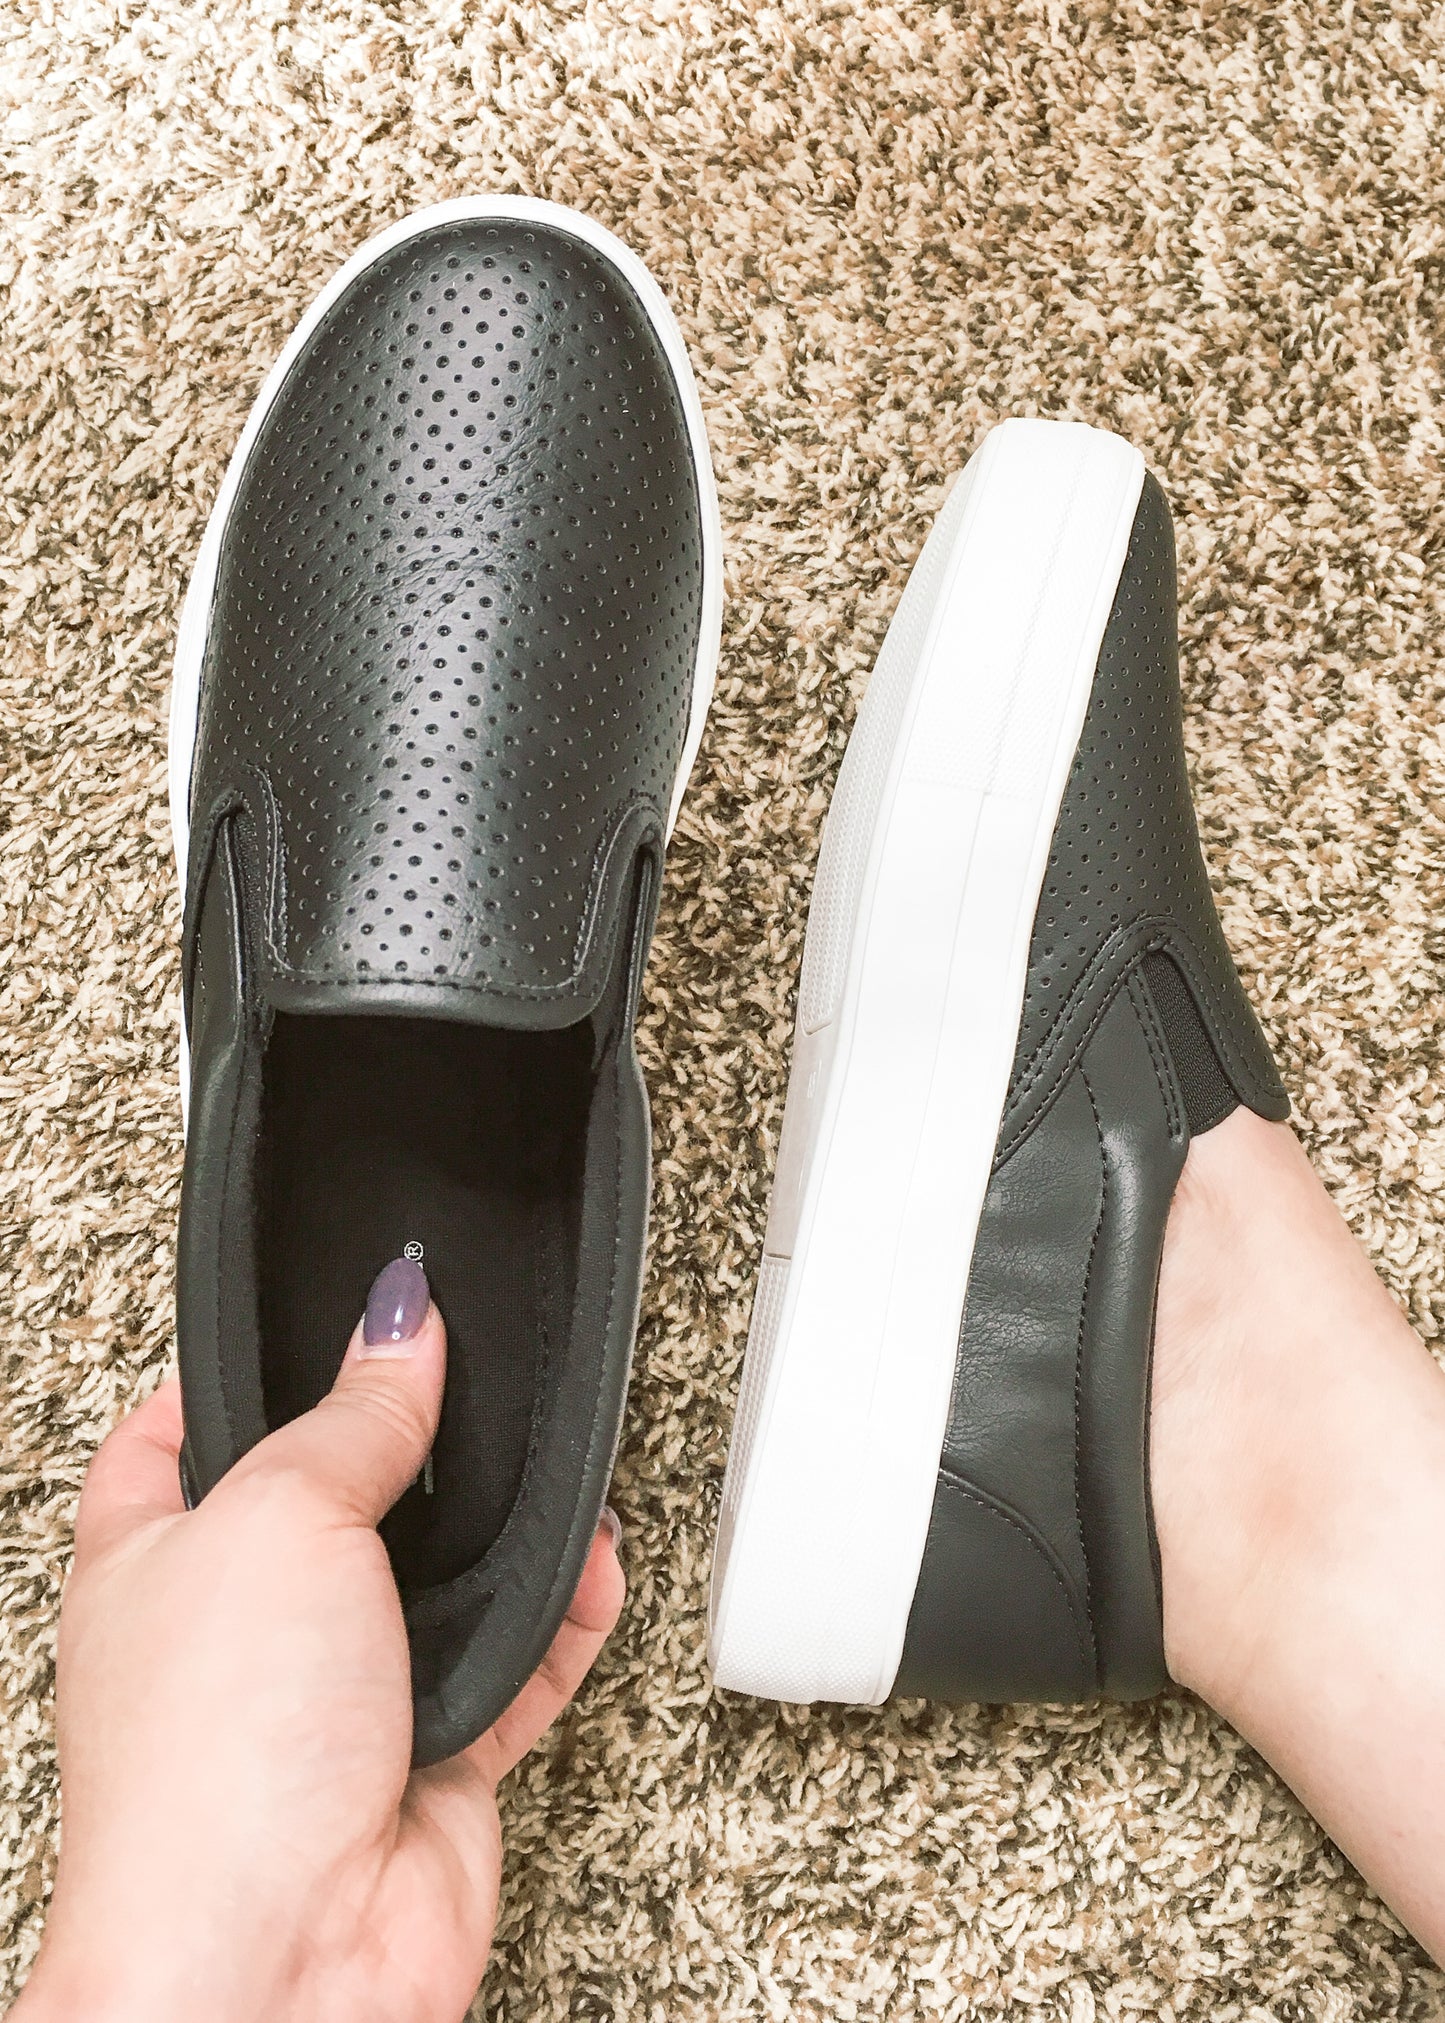 Black Perforated Sneakers